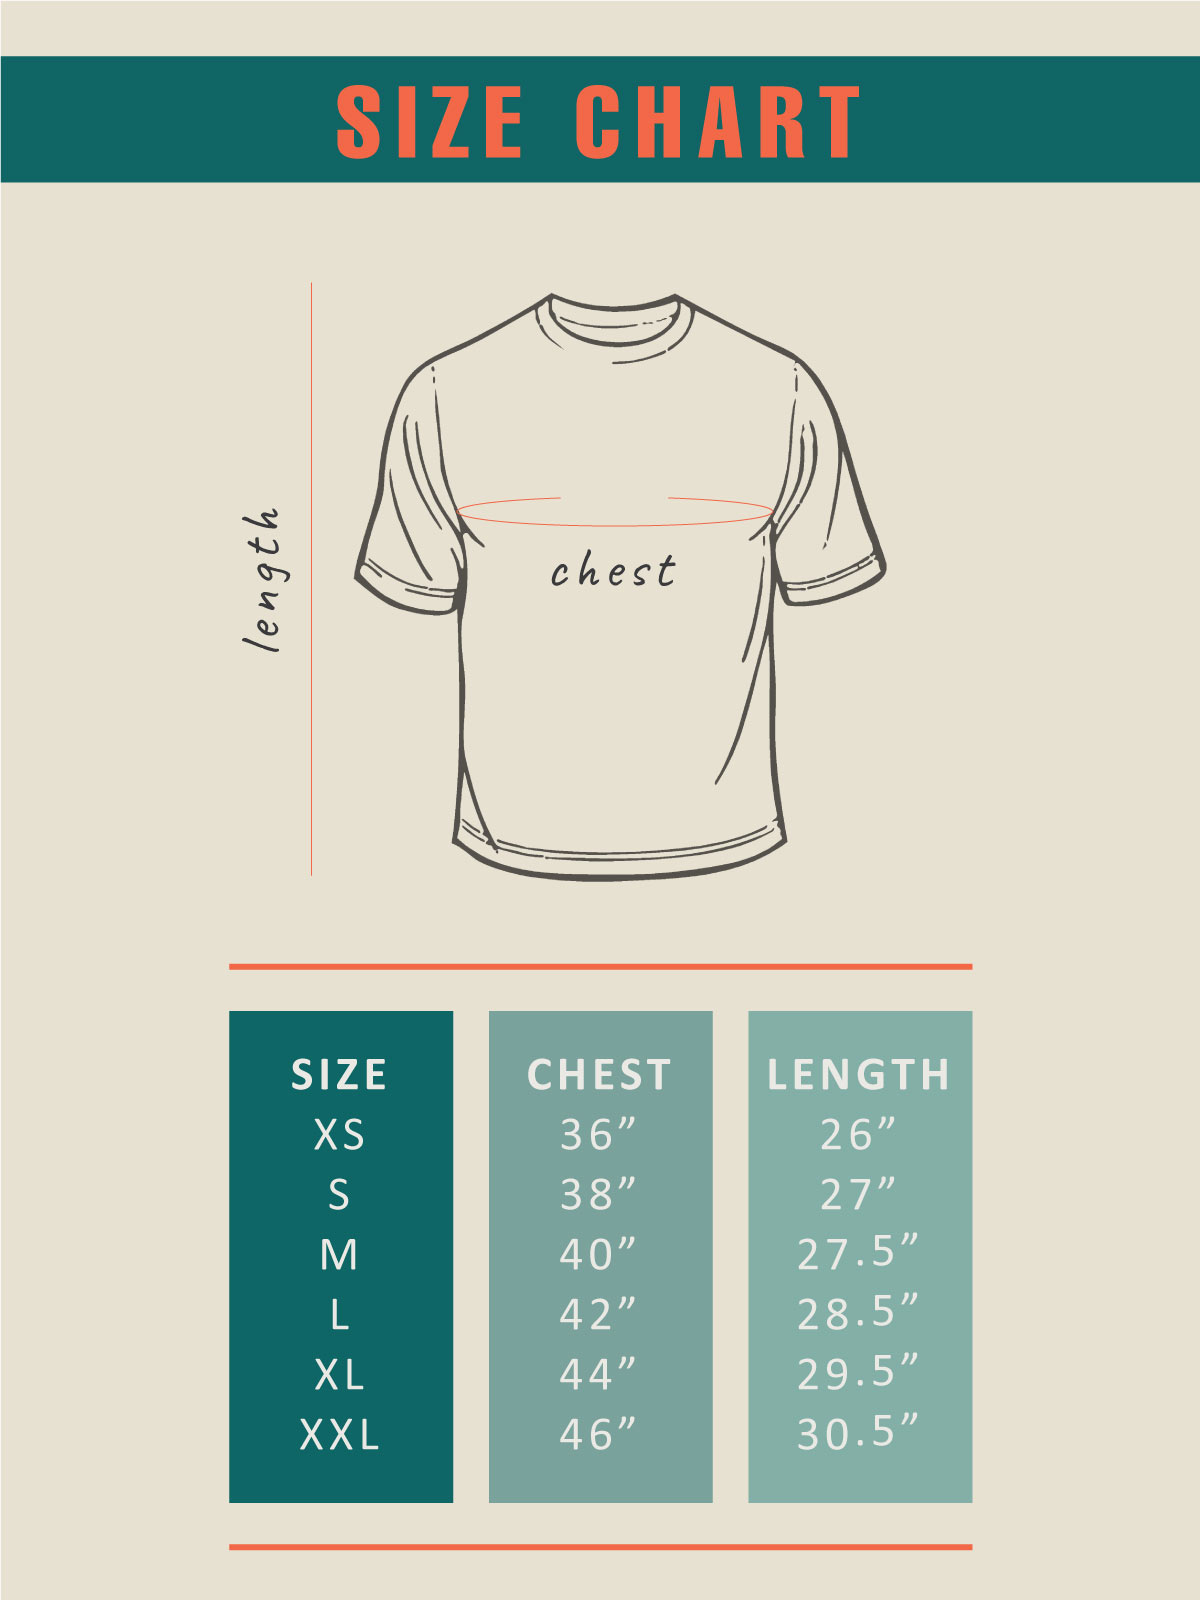 Size Chart of plain unisex tshirt by shopghumakkad